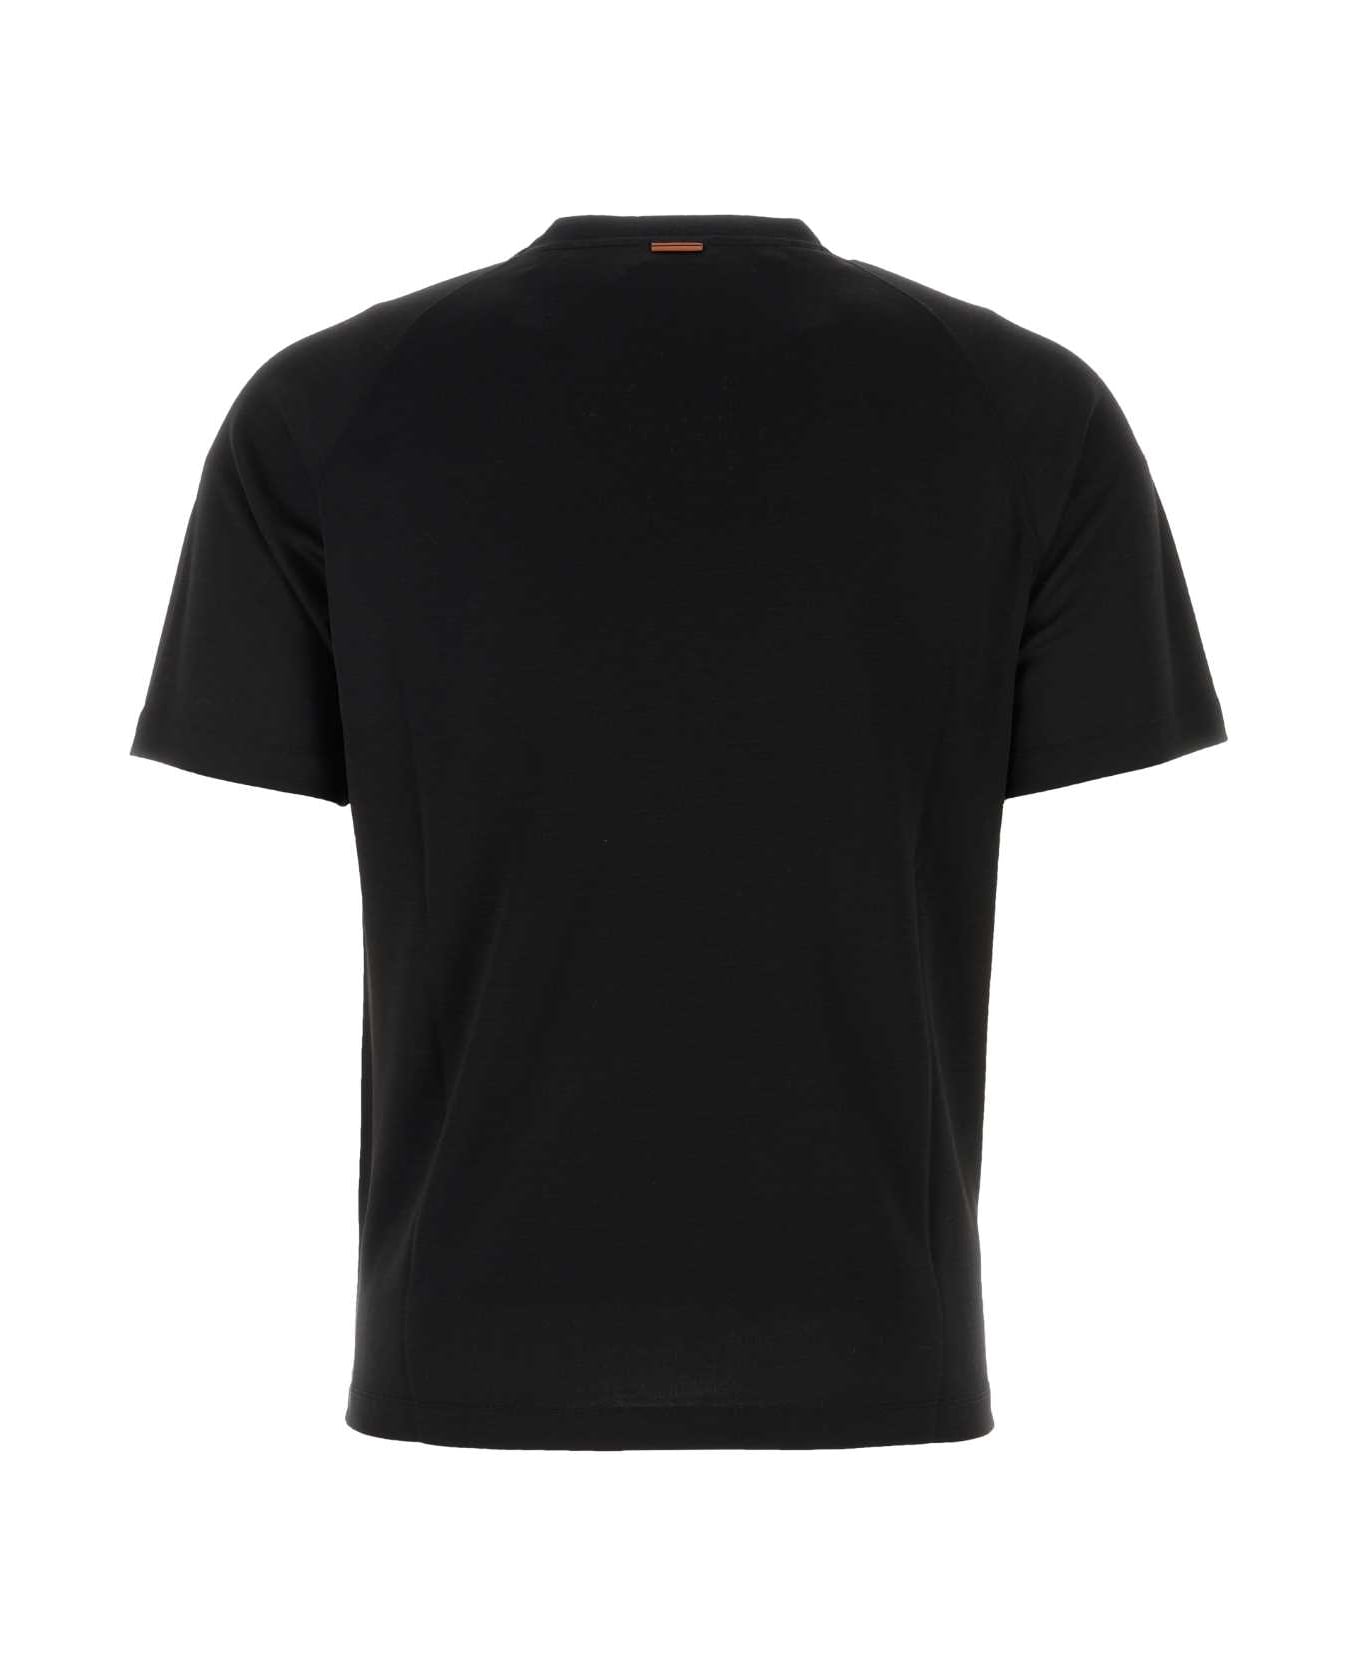 Zegna Black Wool T-shirt - K09